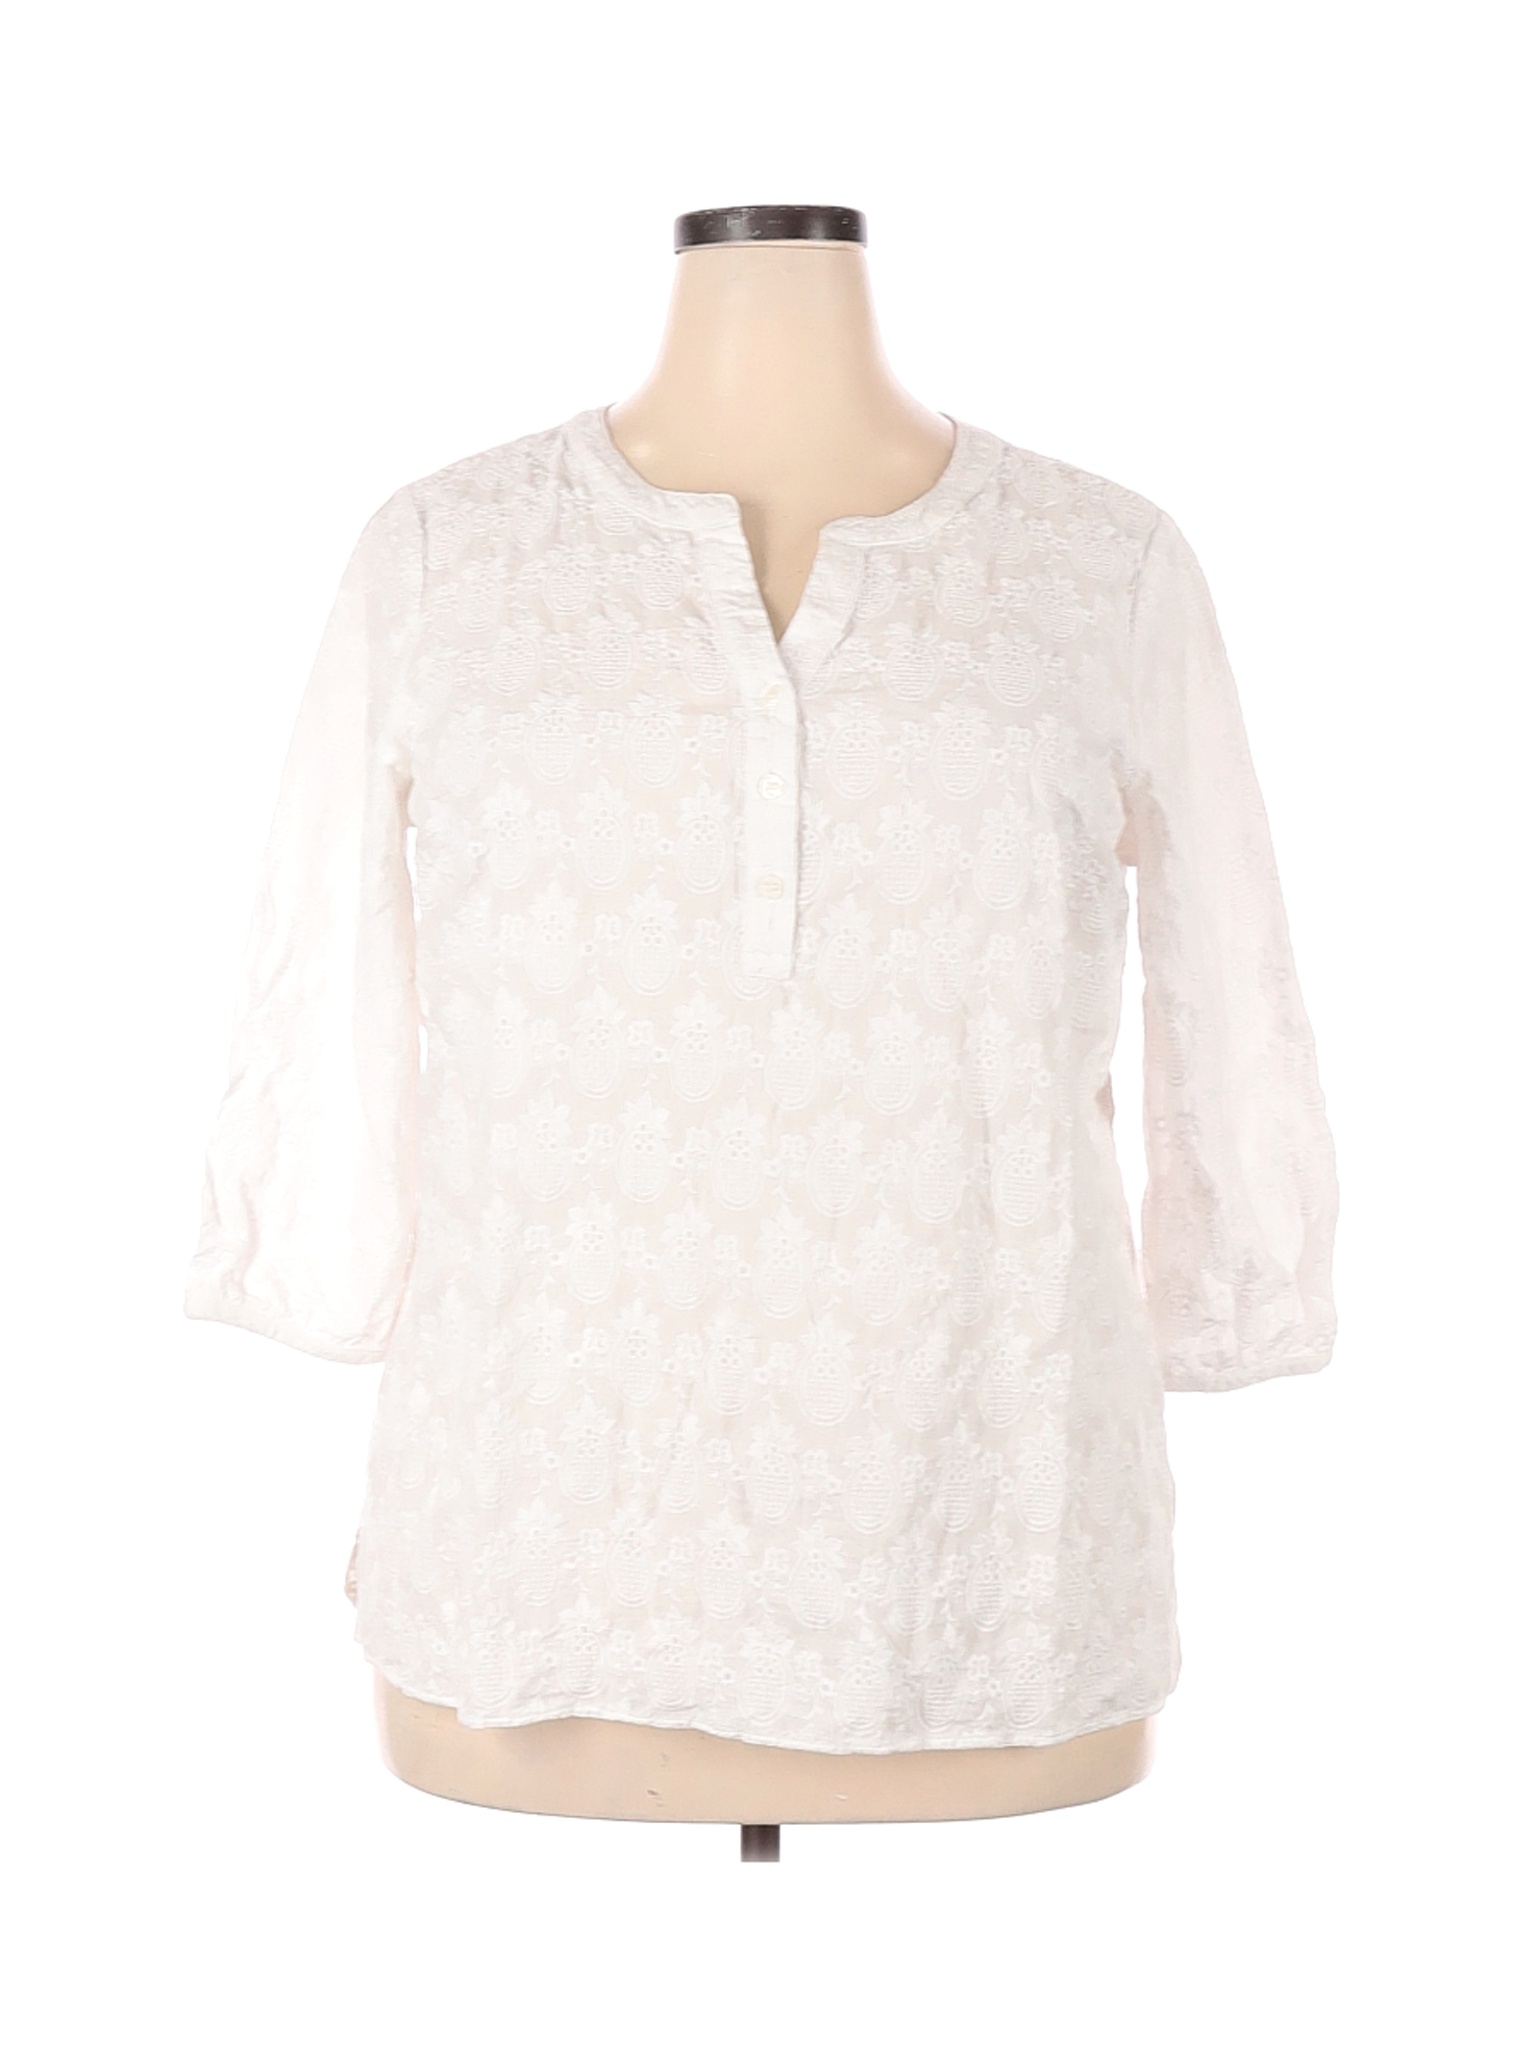 Talbots Women White 3/4 Sleeve Button-Down Shirt 2X Plus | eBay